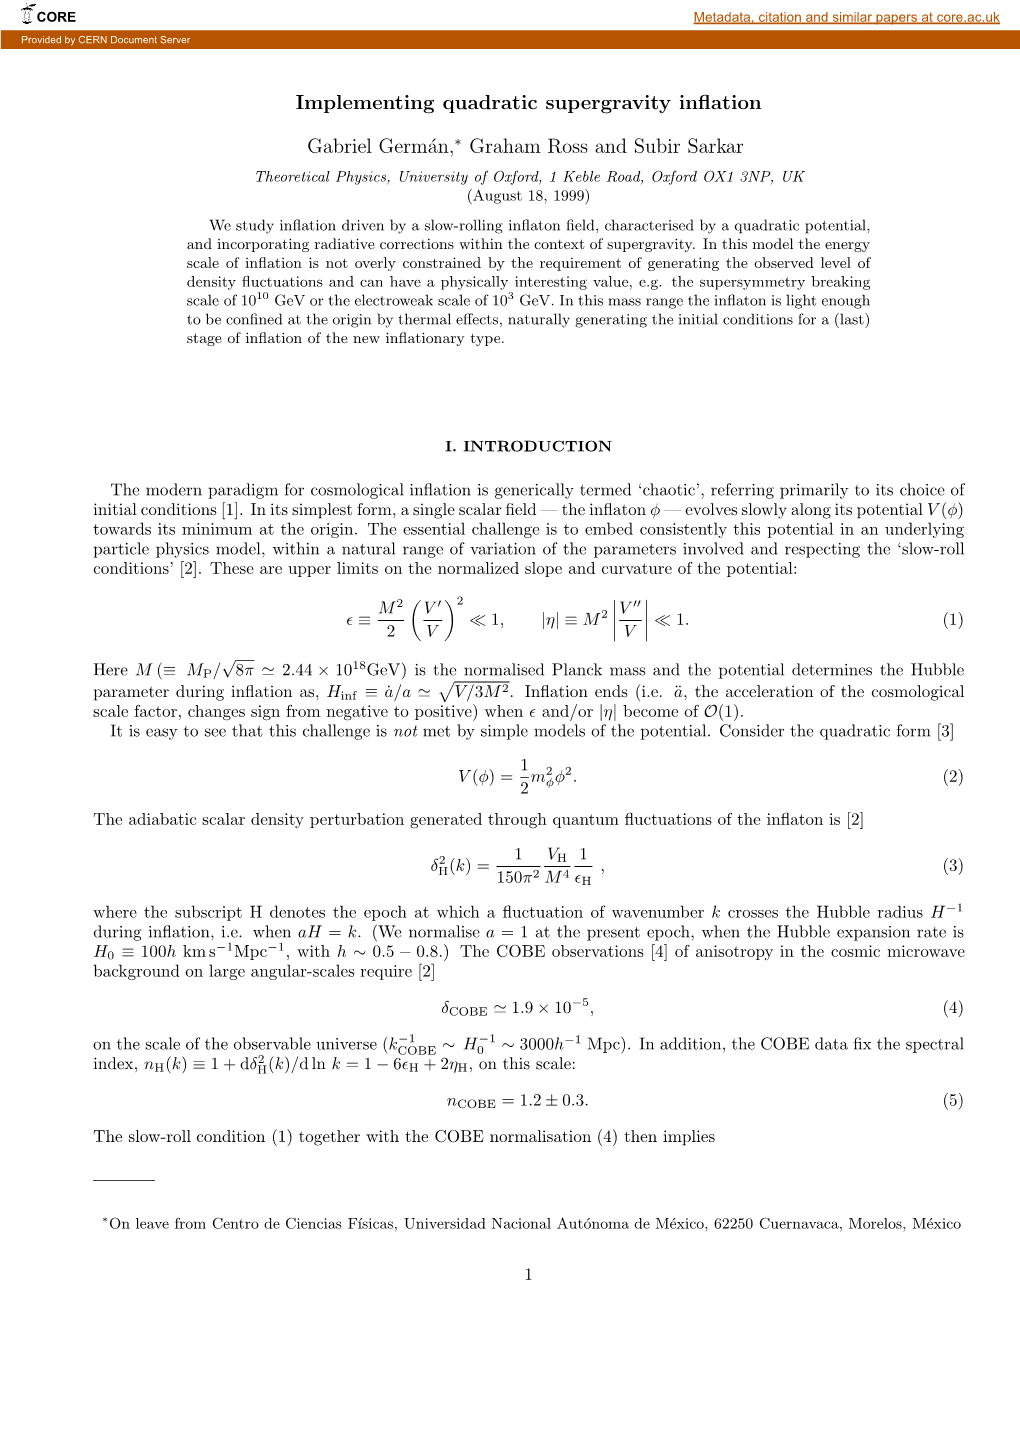 Implementing Quadratic Supergravity Inflation Gabriel Germán, Graham Ross and Subir Sarkar